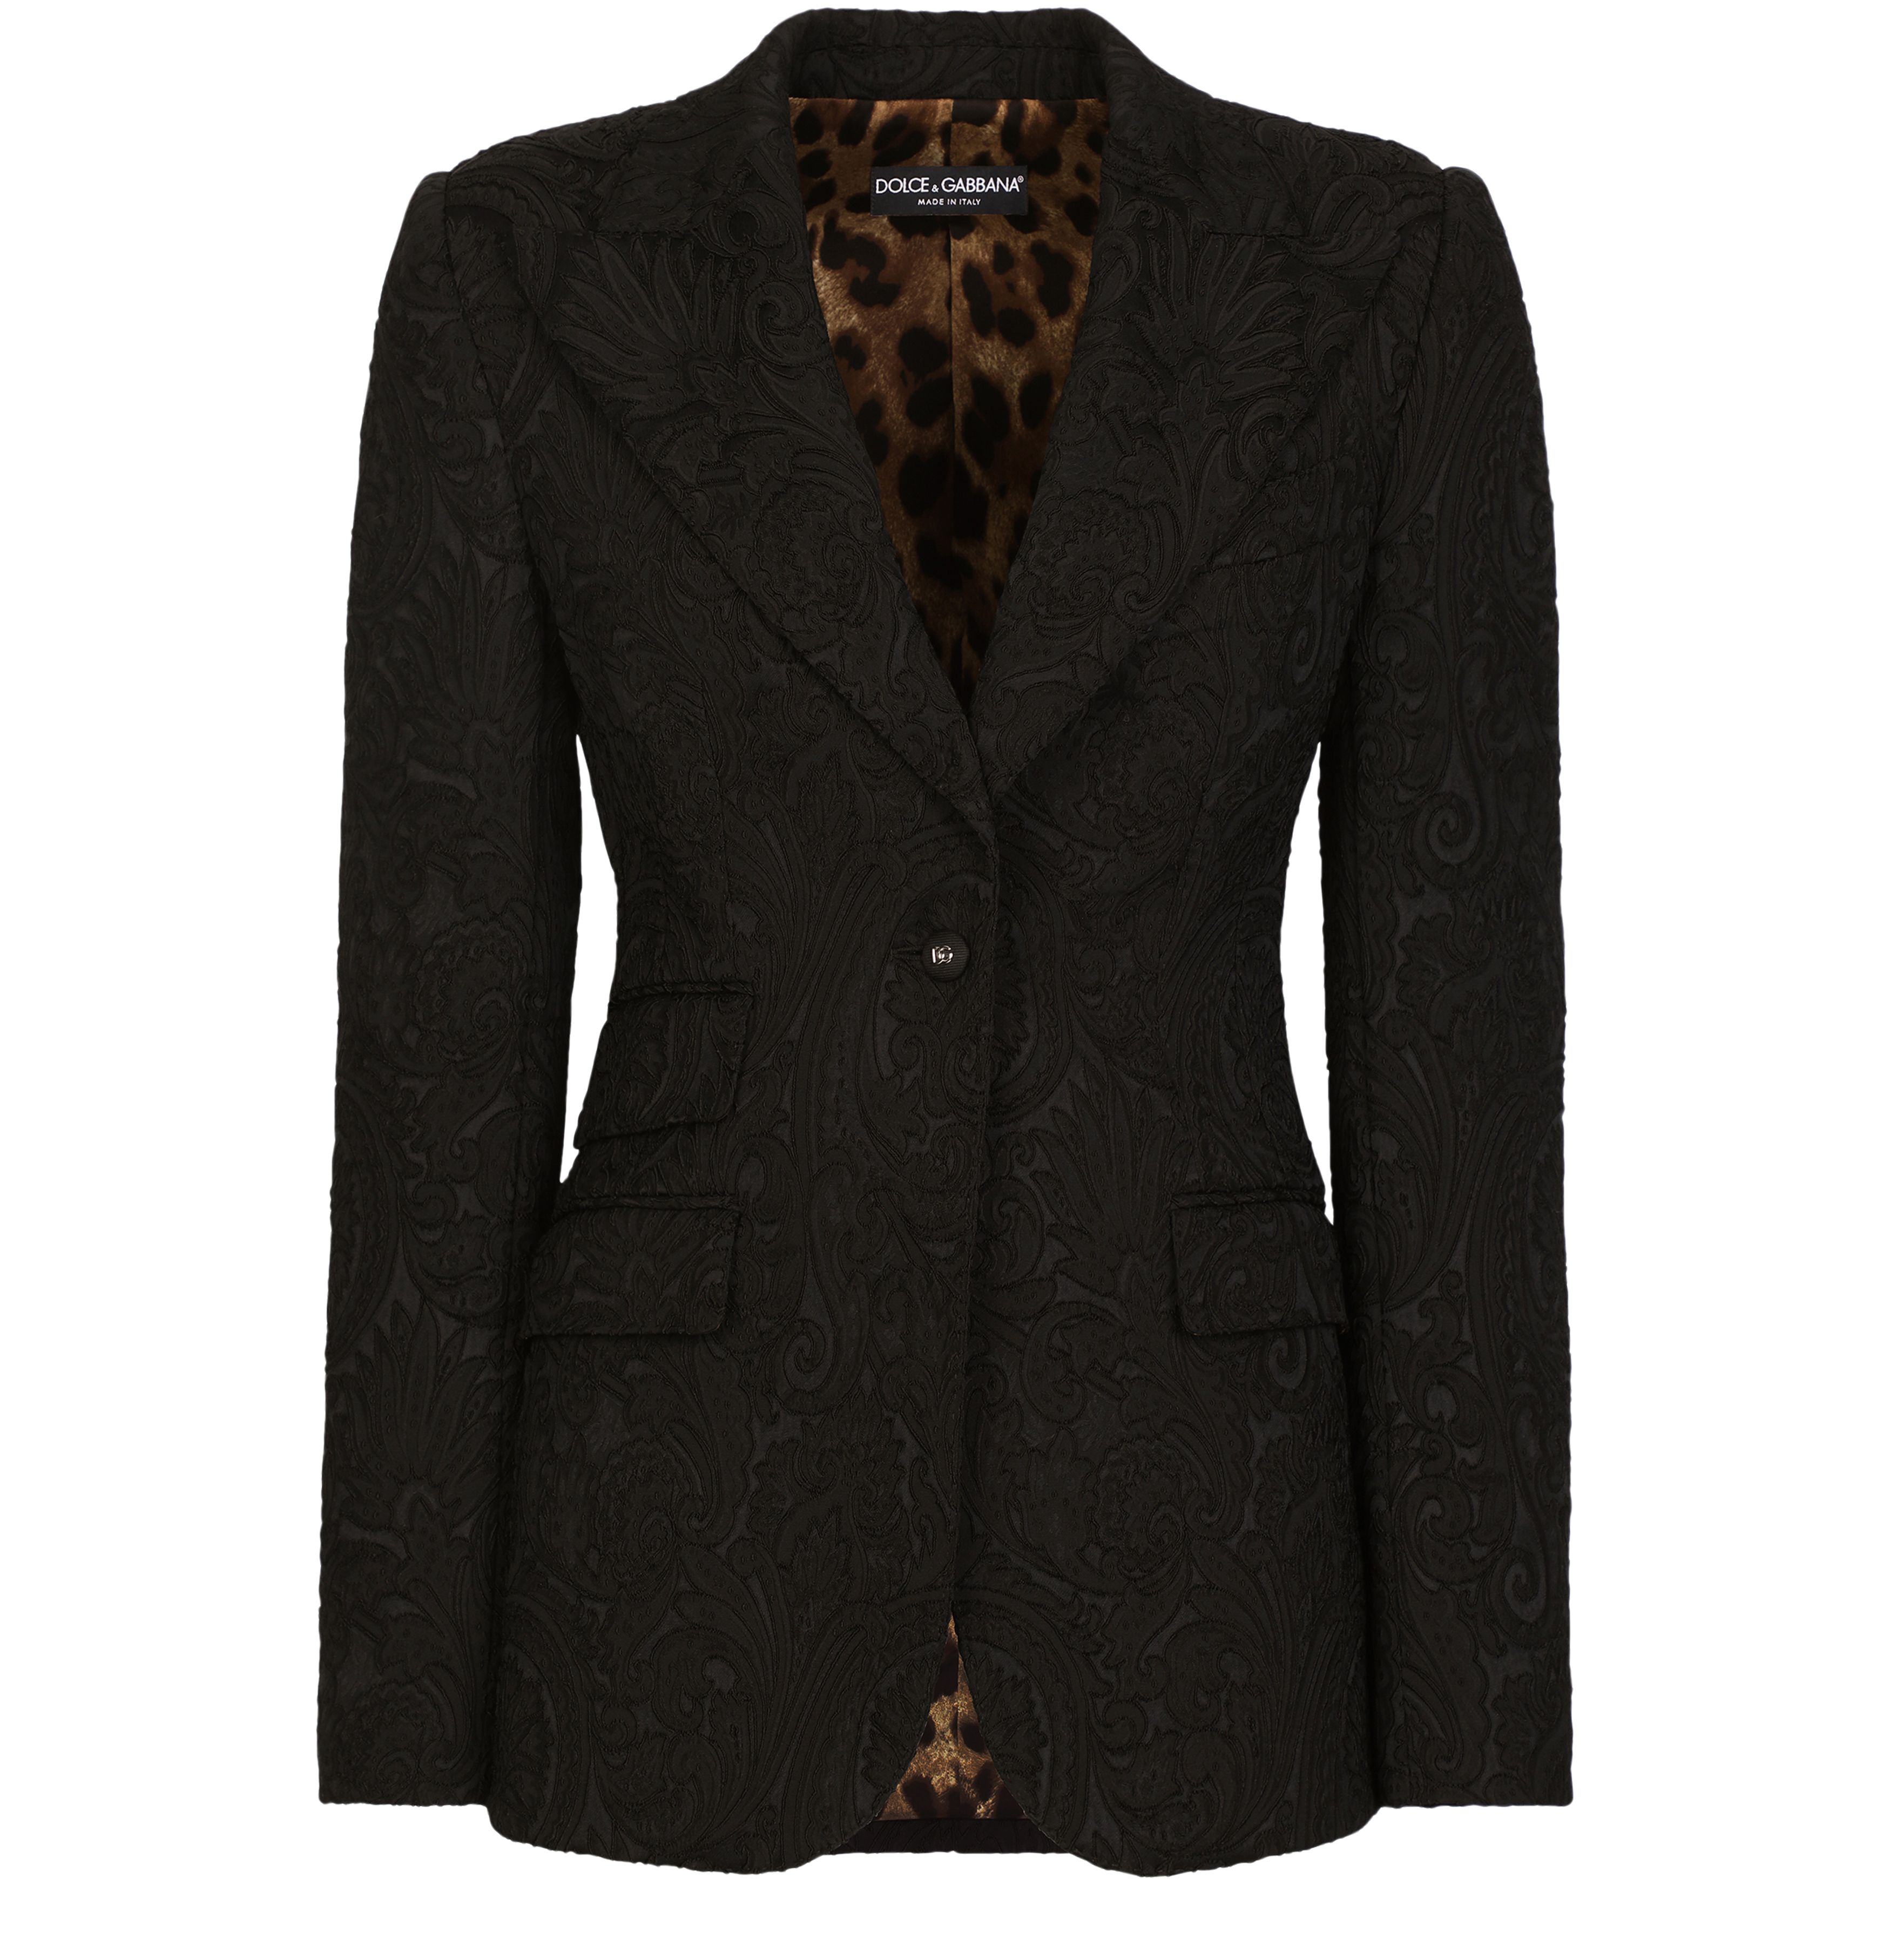 Dolce & Gabbana Jacquard Turlington blazer